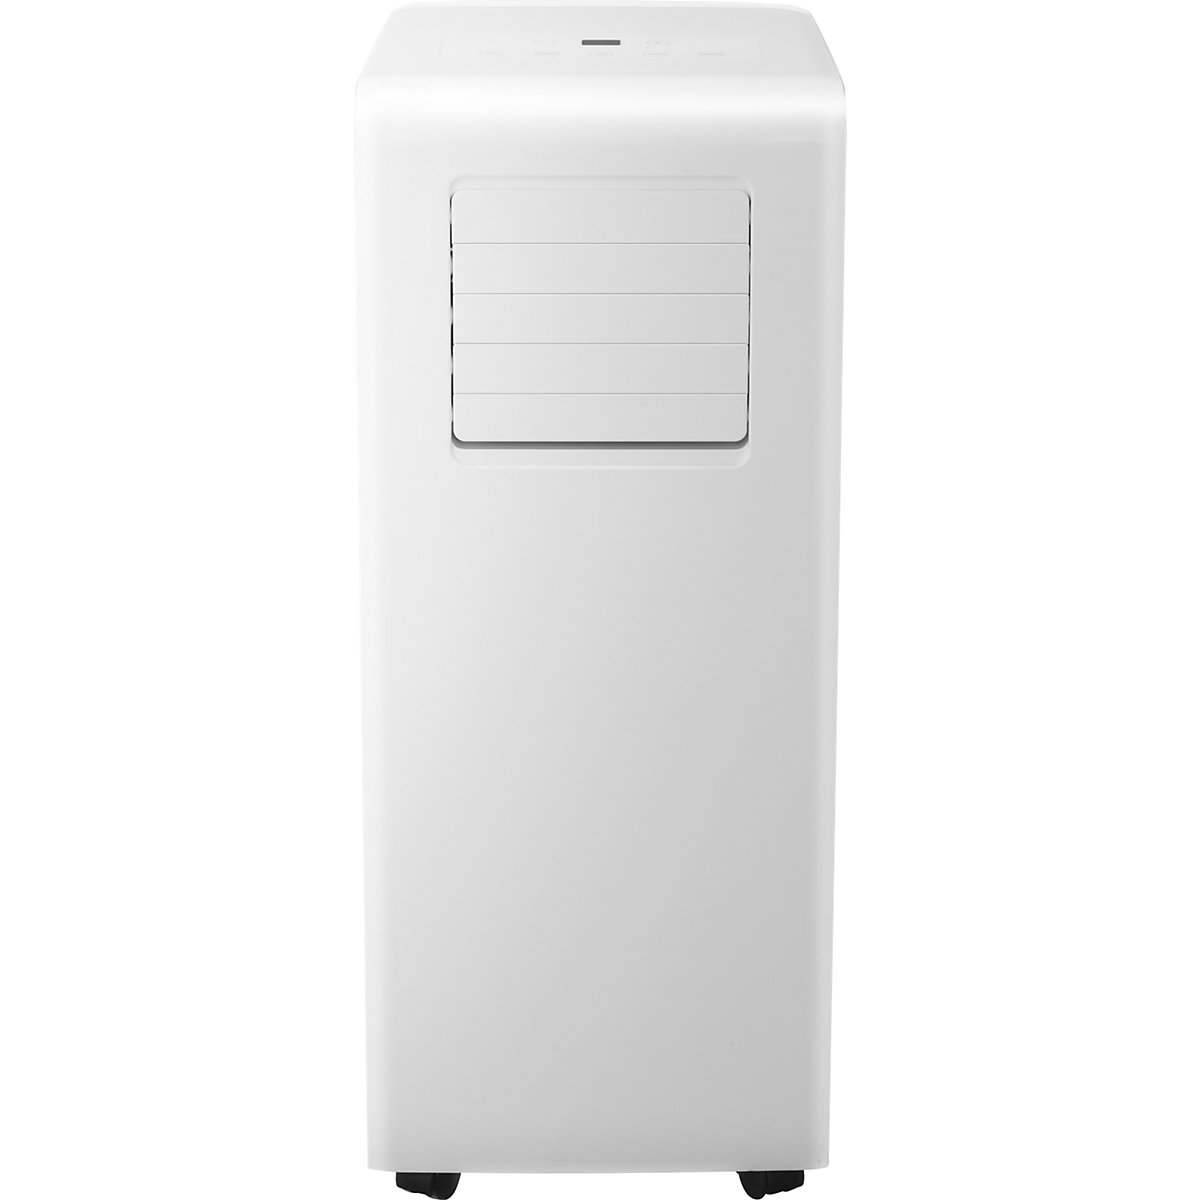 9000 BTU mobile air conditioner - GREE